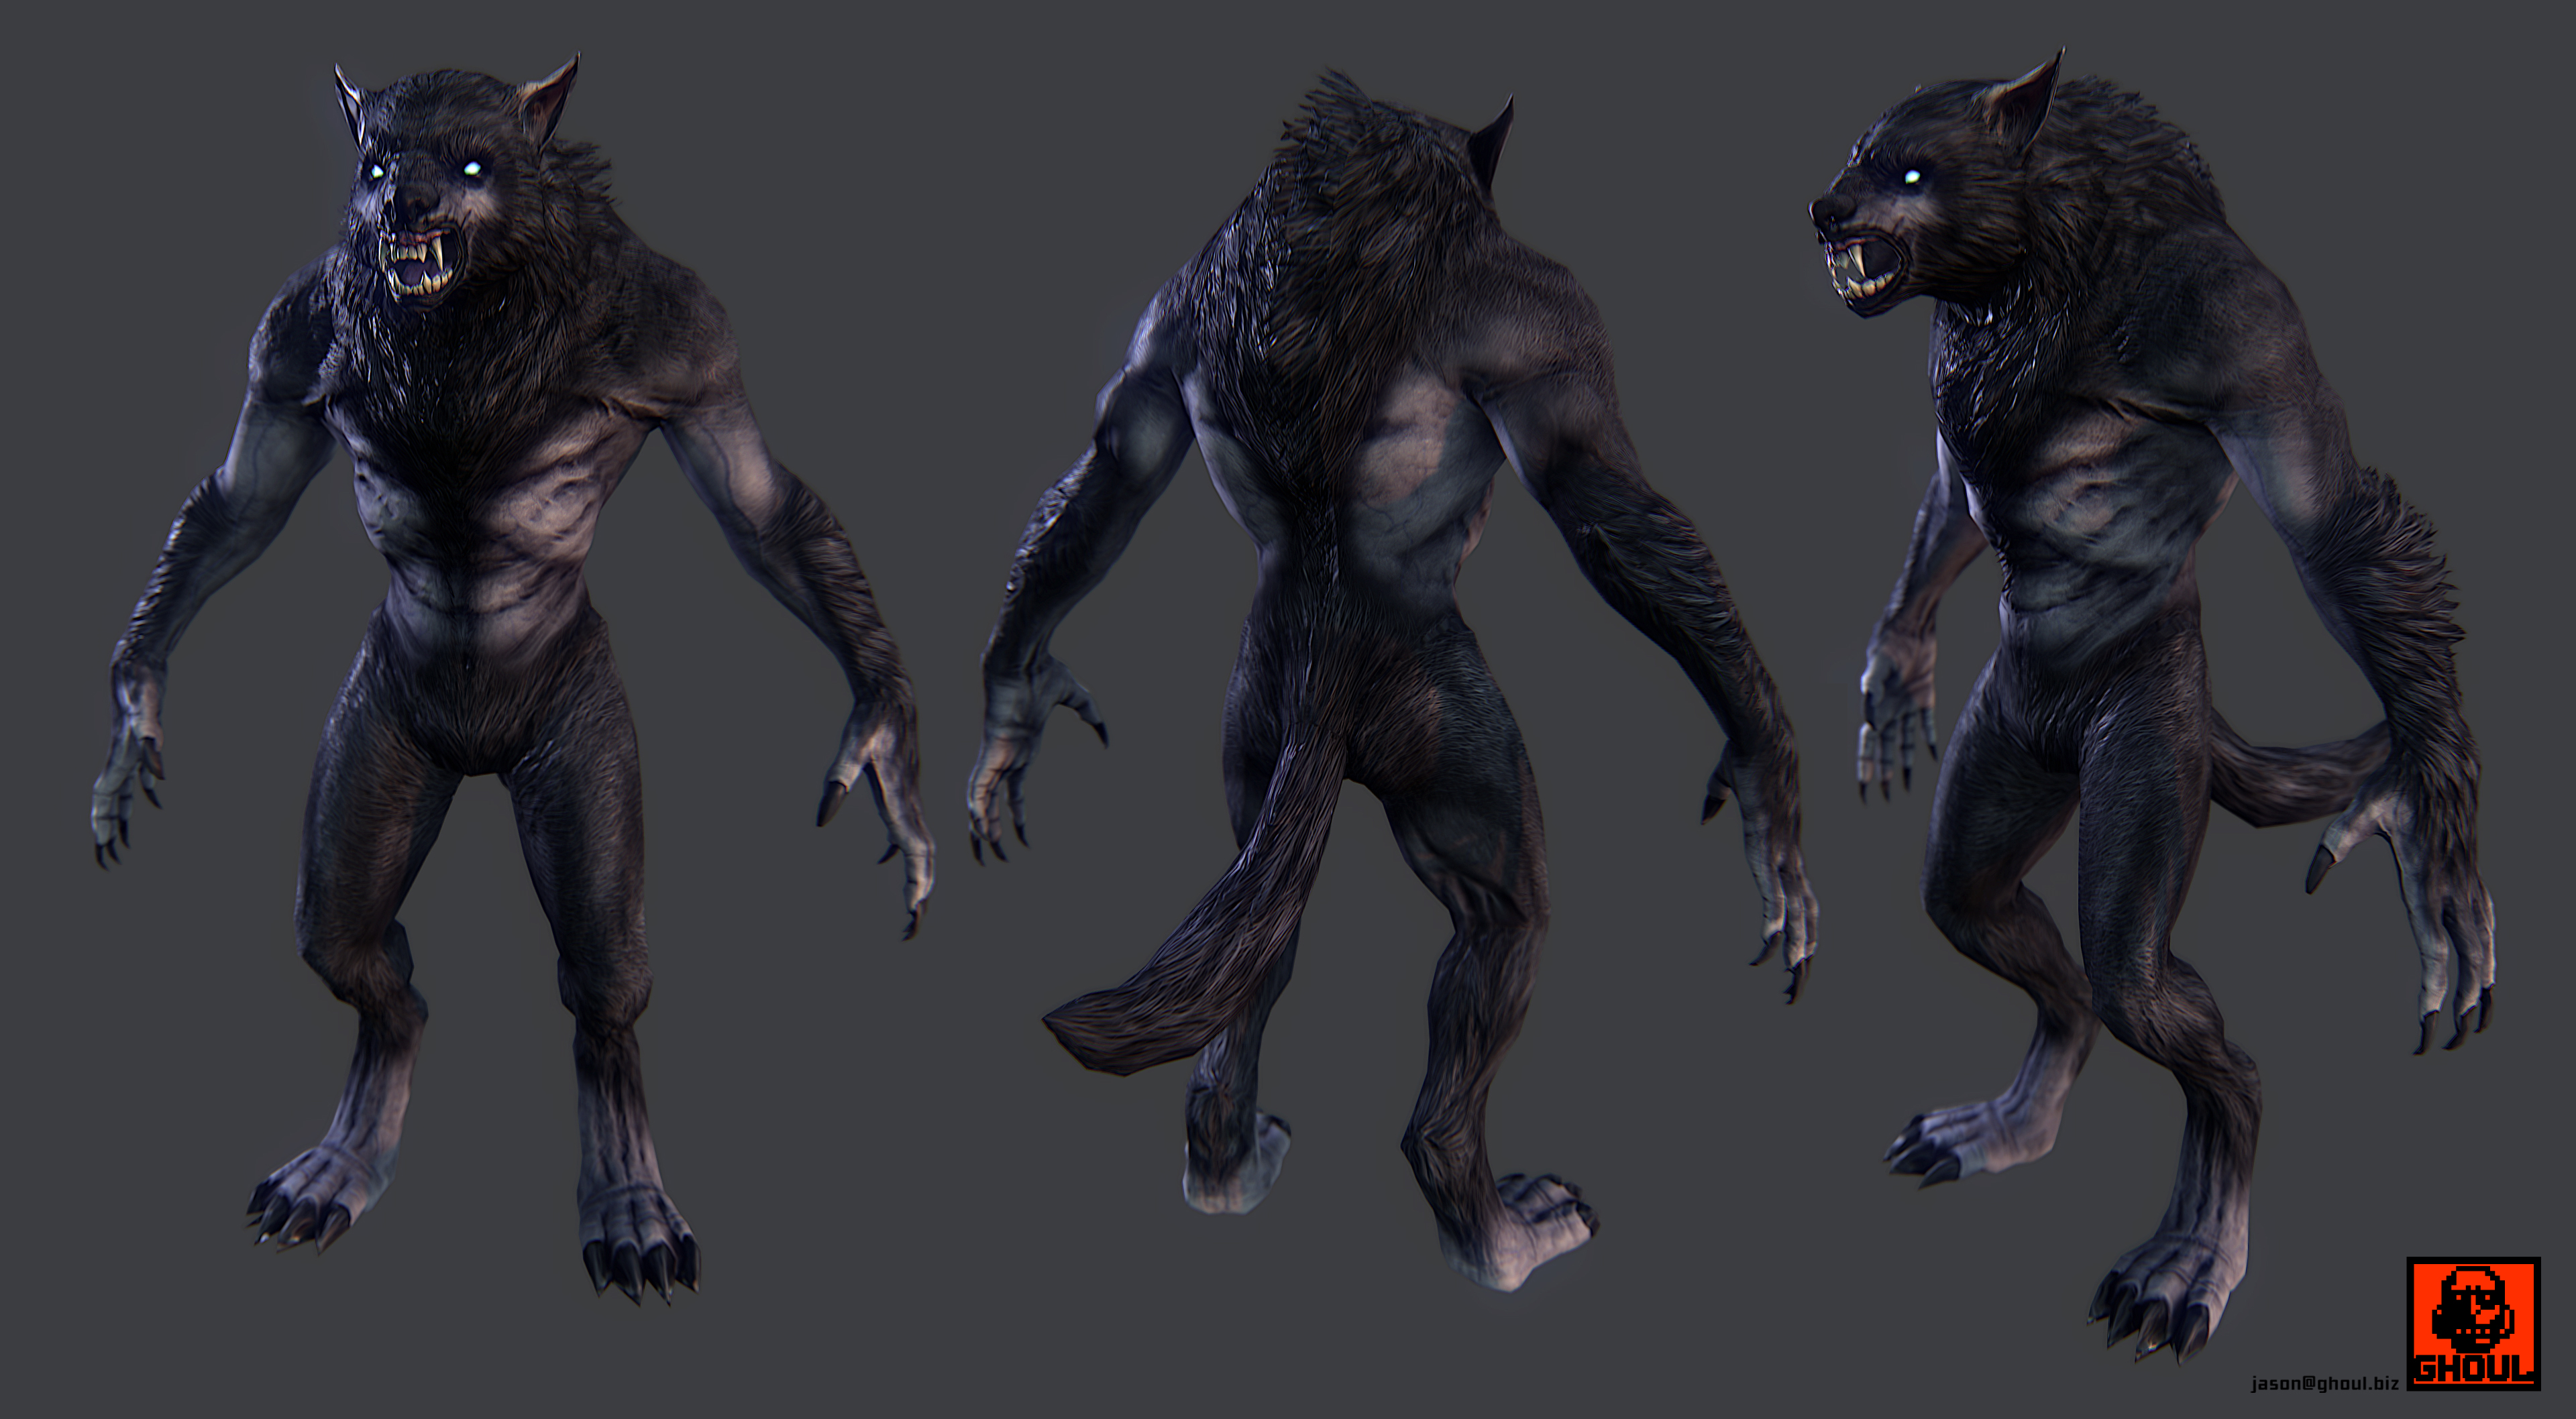 Werewolf Vs Vampire Skyrim Image Crazy Gallery